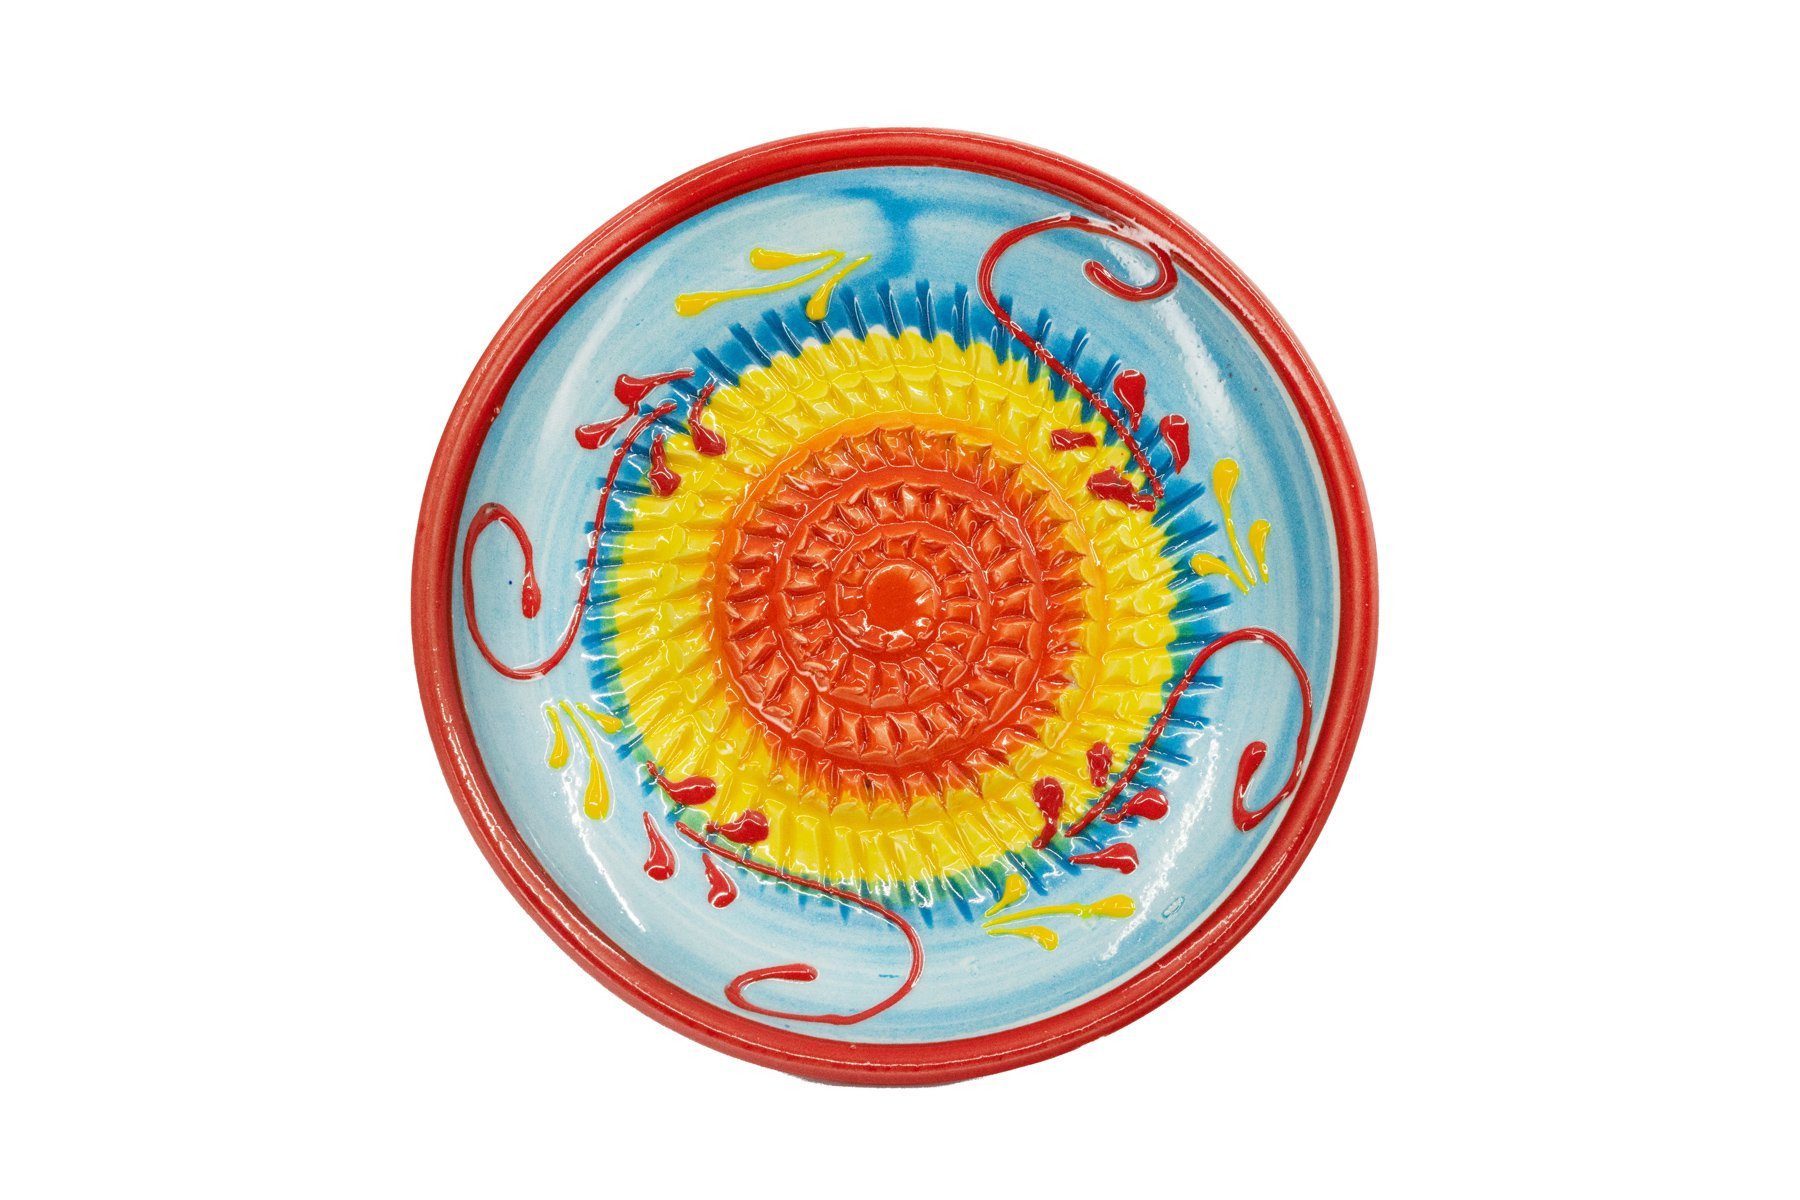 Kaladia Multireibe 12cm Reibeteller in rot, hellblau & gelb, Keramik, handbemalte Küchenreibe - Made in Spain